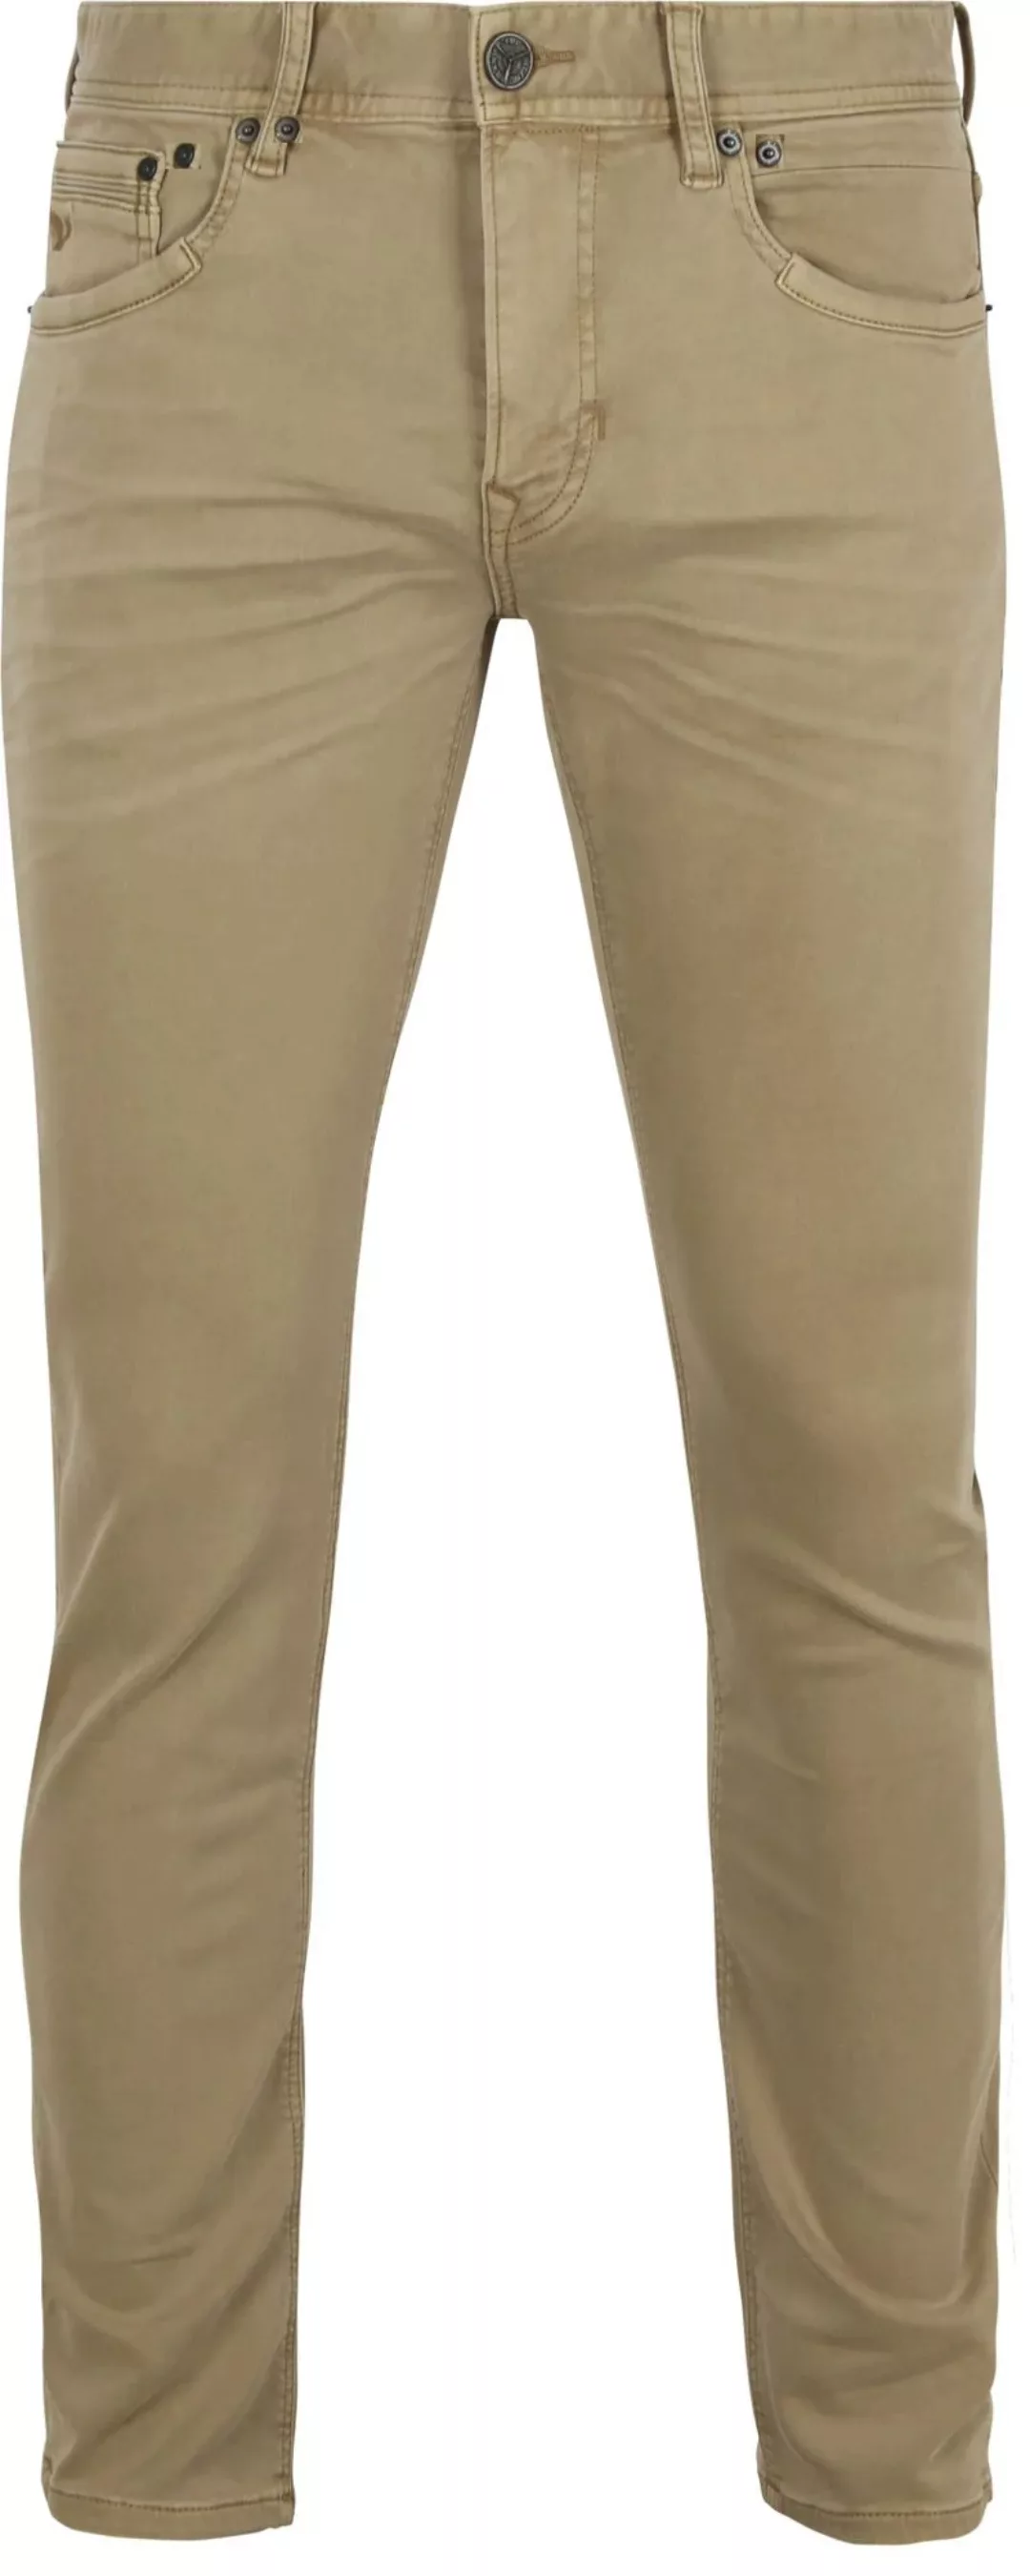 PME Legend Tailwheel Jeans Khaki - Größe W 34 - L 32 günstig online kaufen